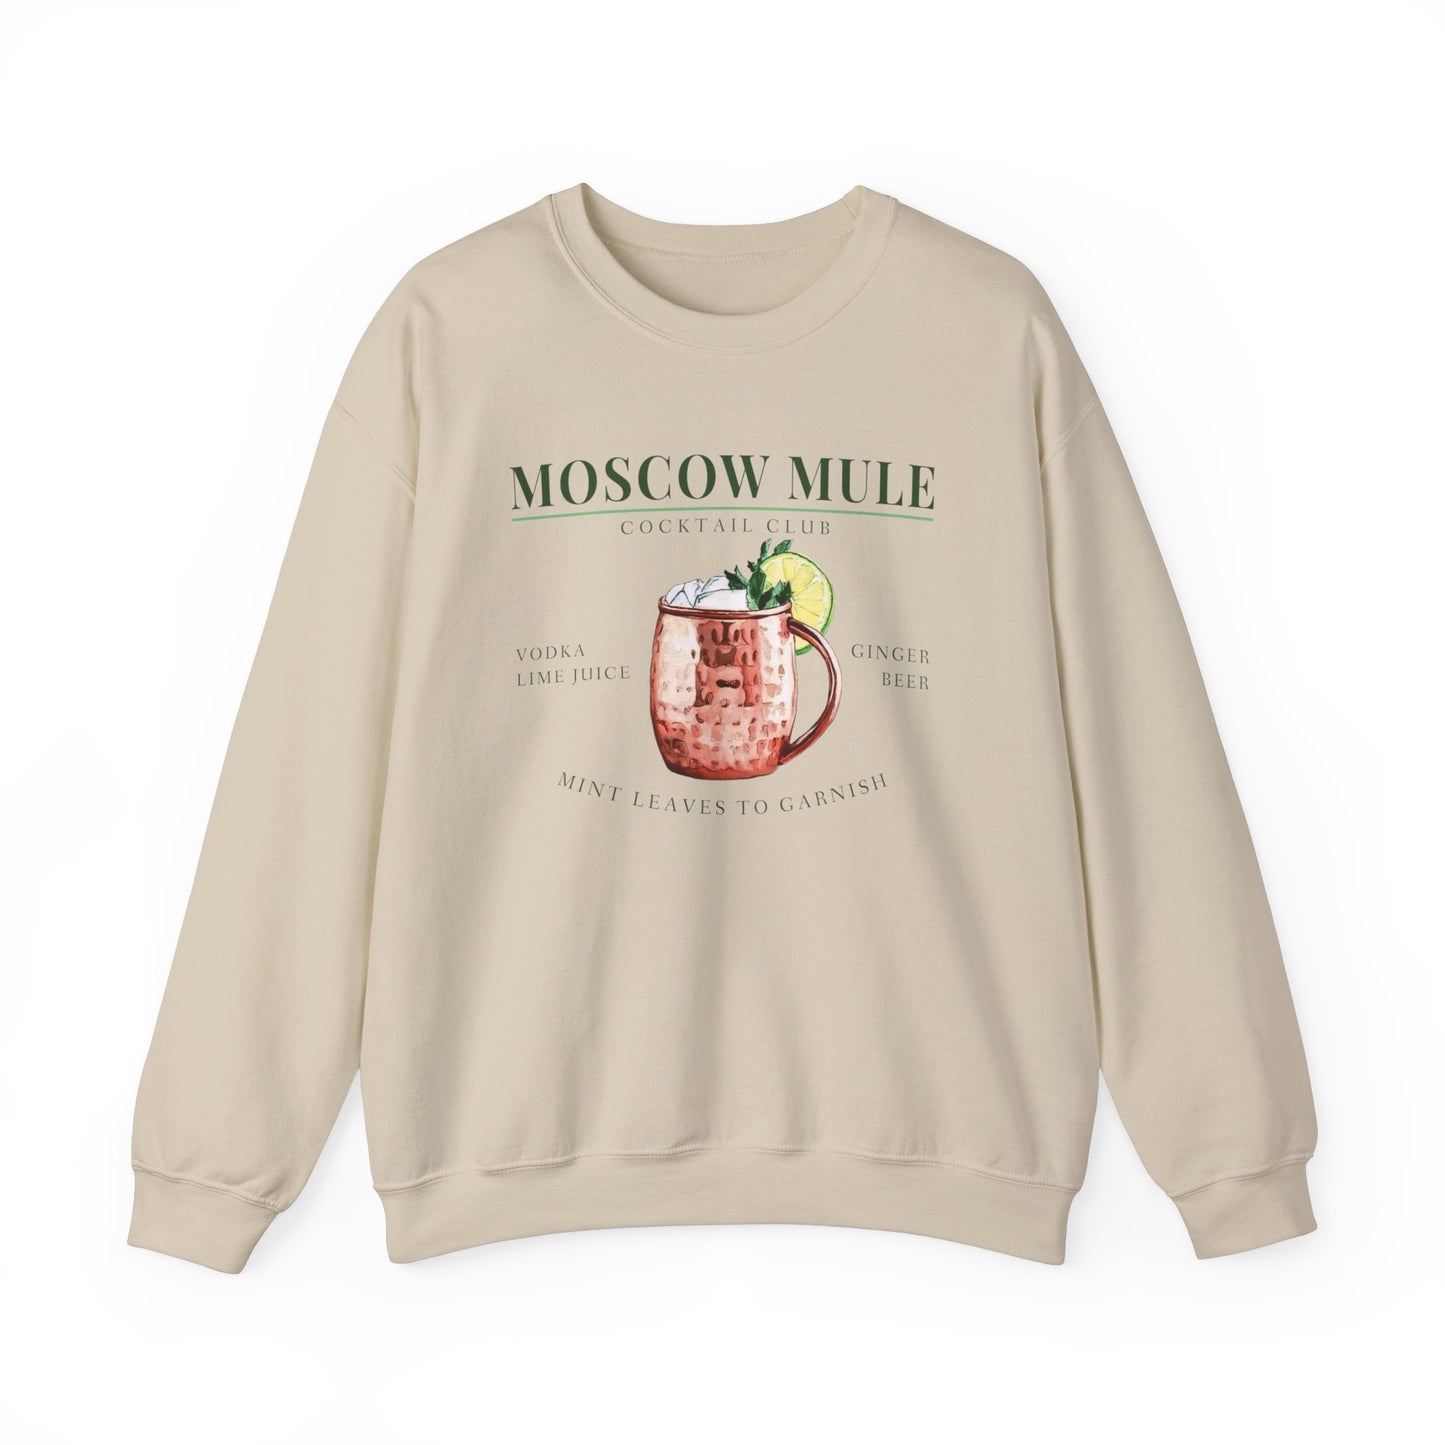 Moscow Mule Cocktail Club Sweatshirt